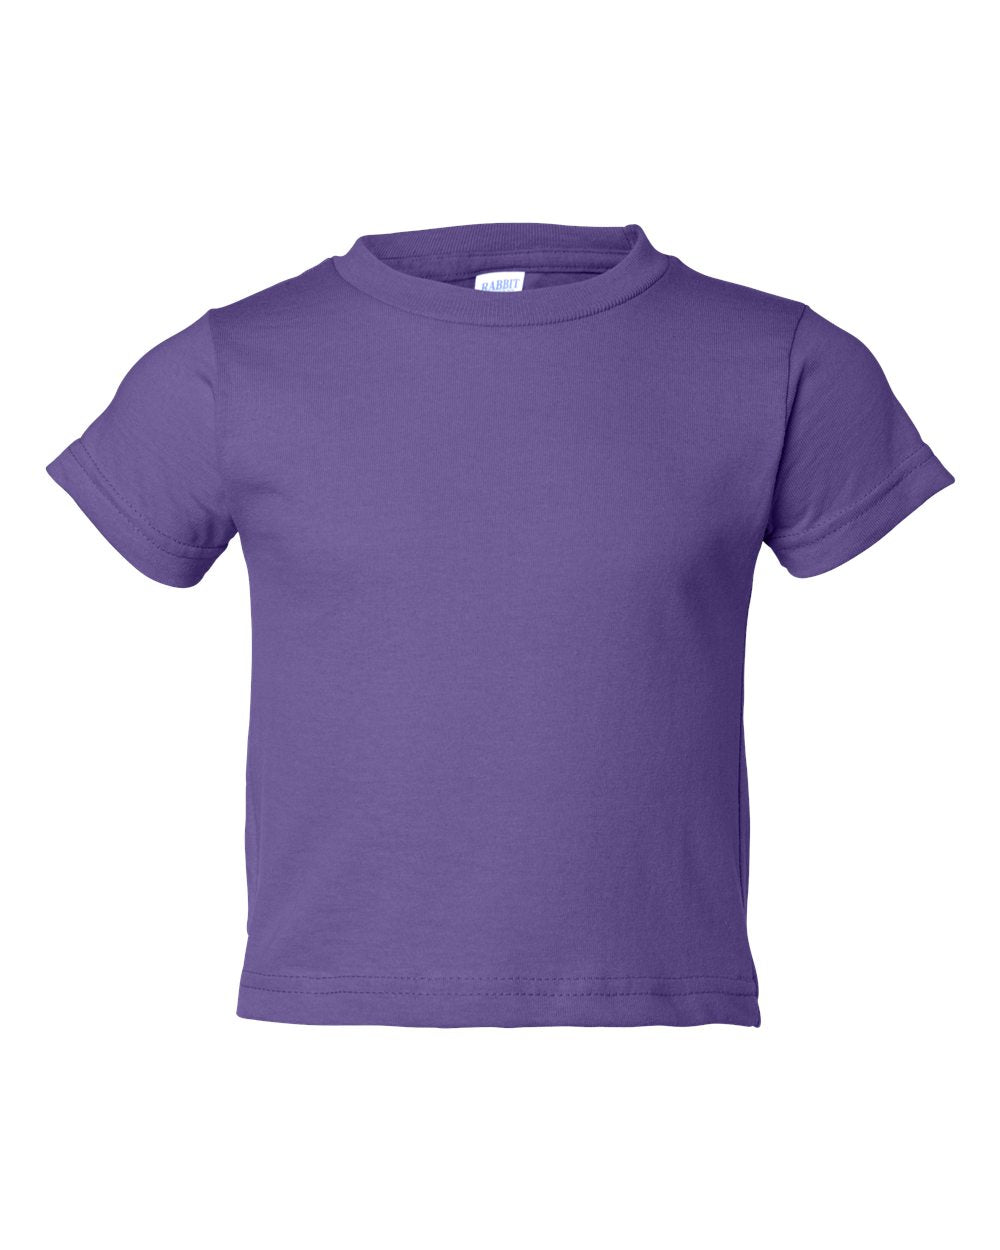 rabbit skins toddler cotton jersey tee purple